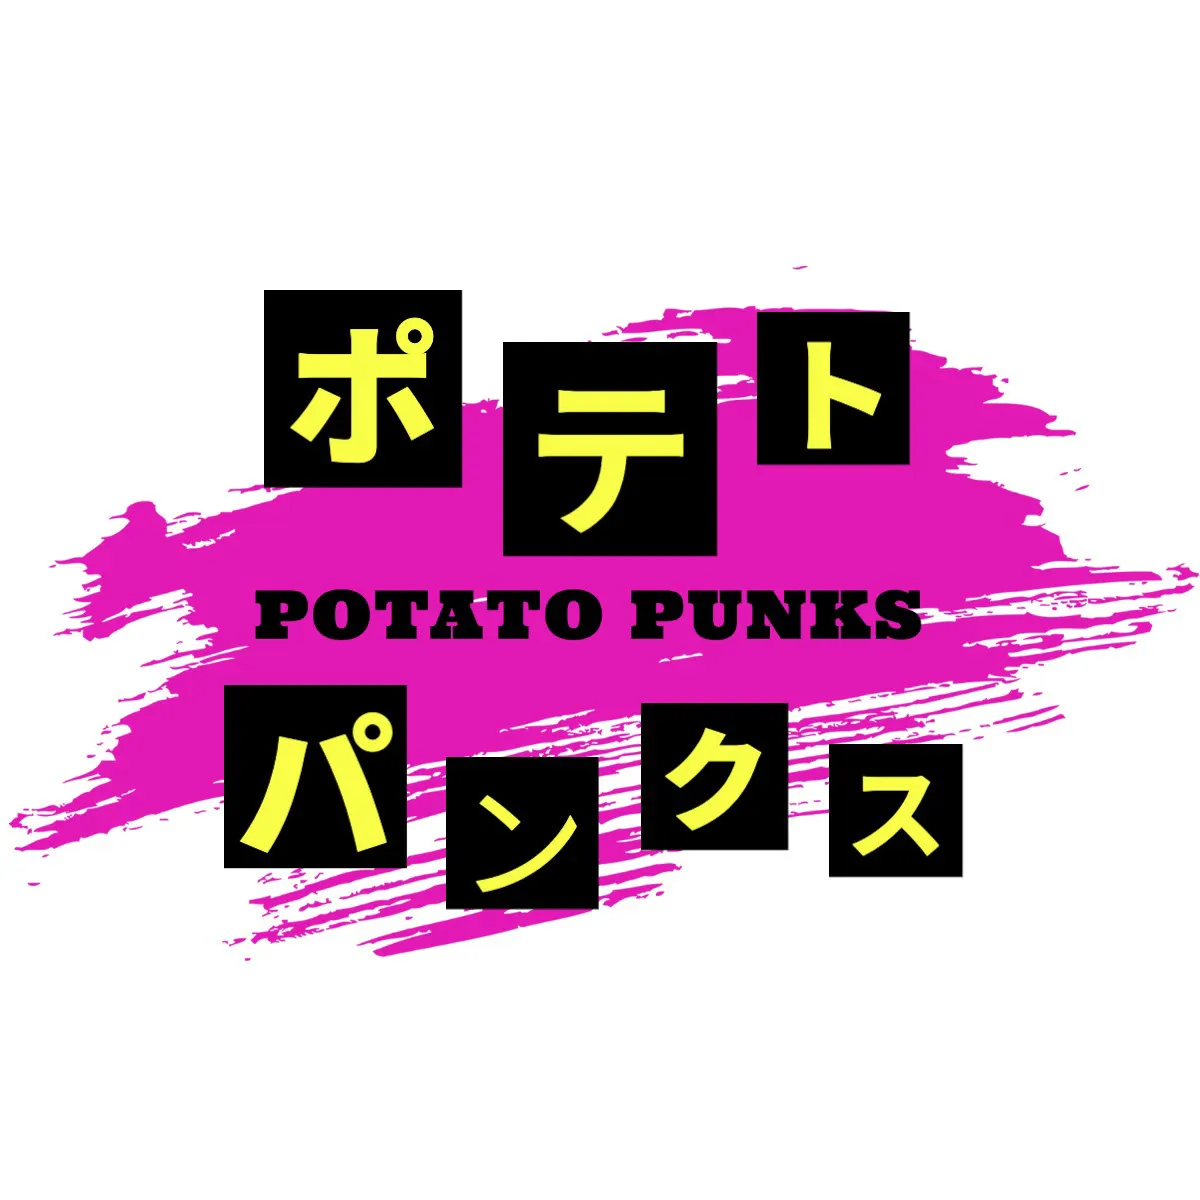 POTATO PUNKS band logo